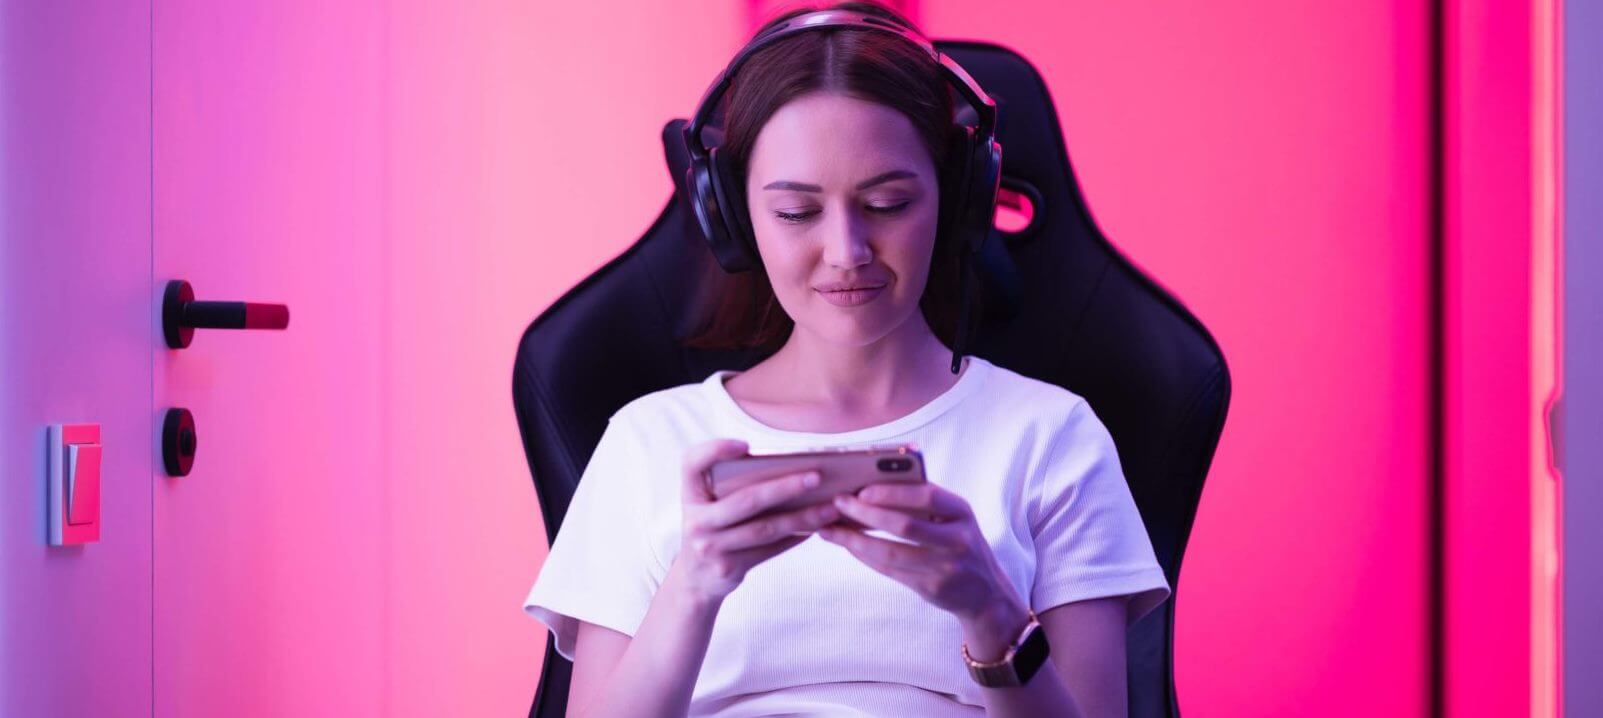 Más mobile gamers mujeres que hombres